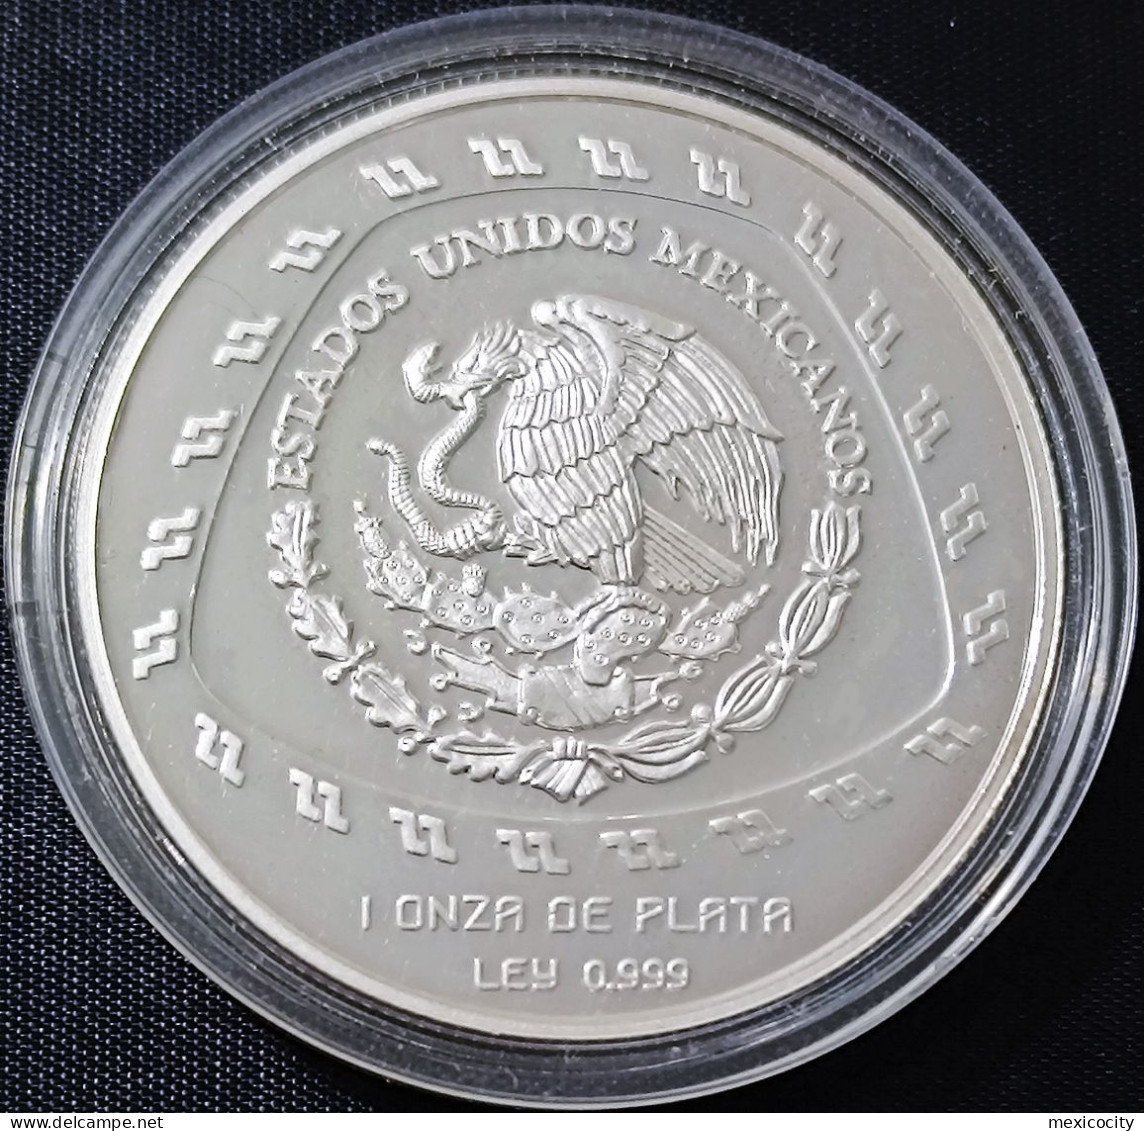 MEXICO 1998 $5 QUETZALCOATL Precol. Series .999 Silver Coin, See Imgs., Nice, Rather Scarce - Mexico